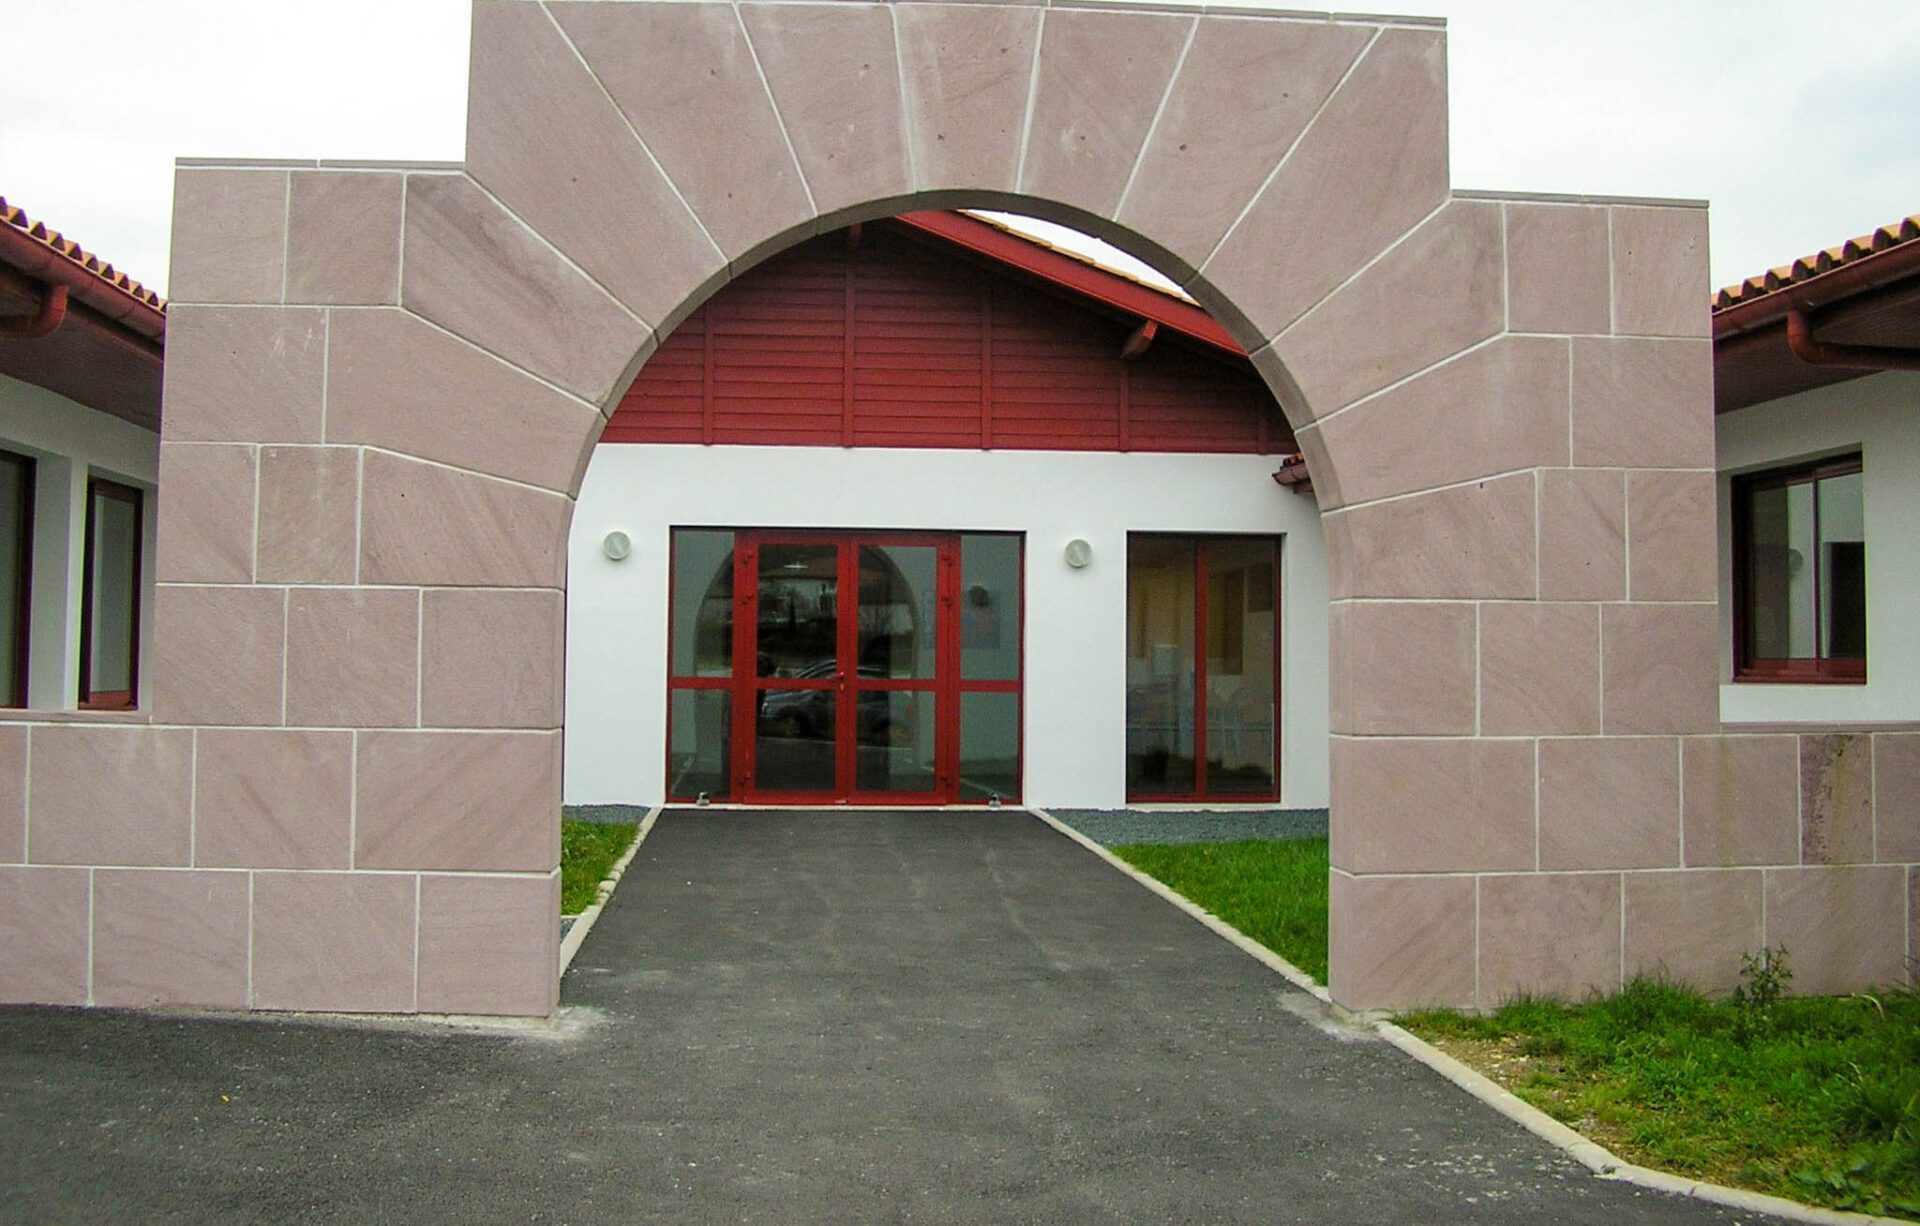 Red burgundy sandstone door entrance